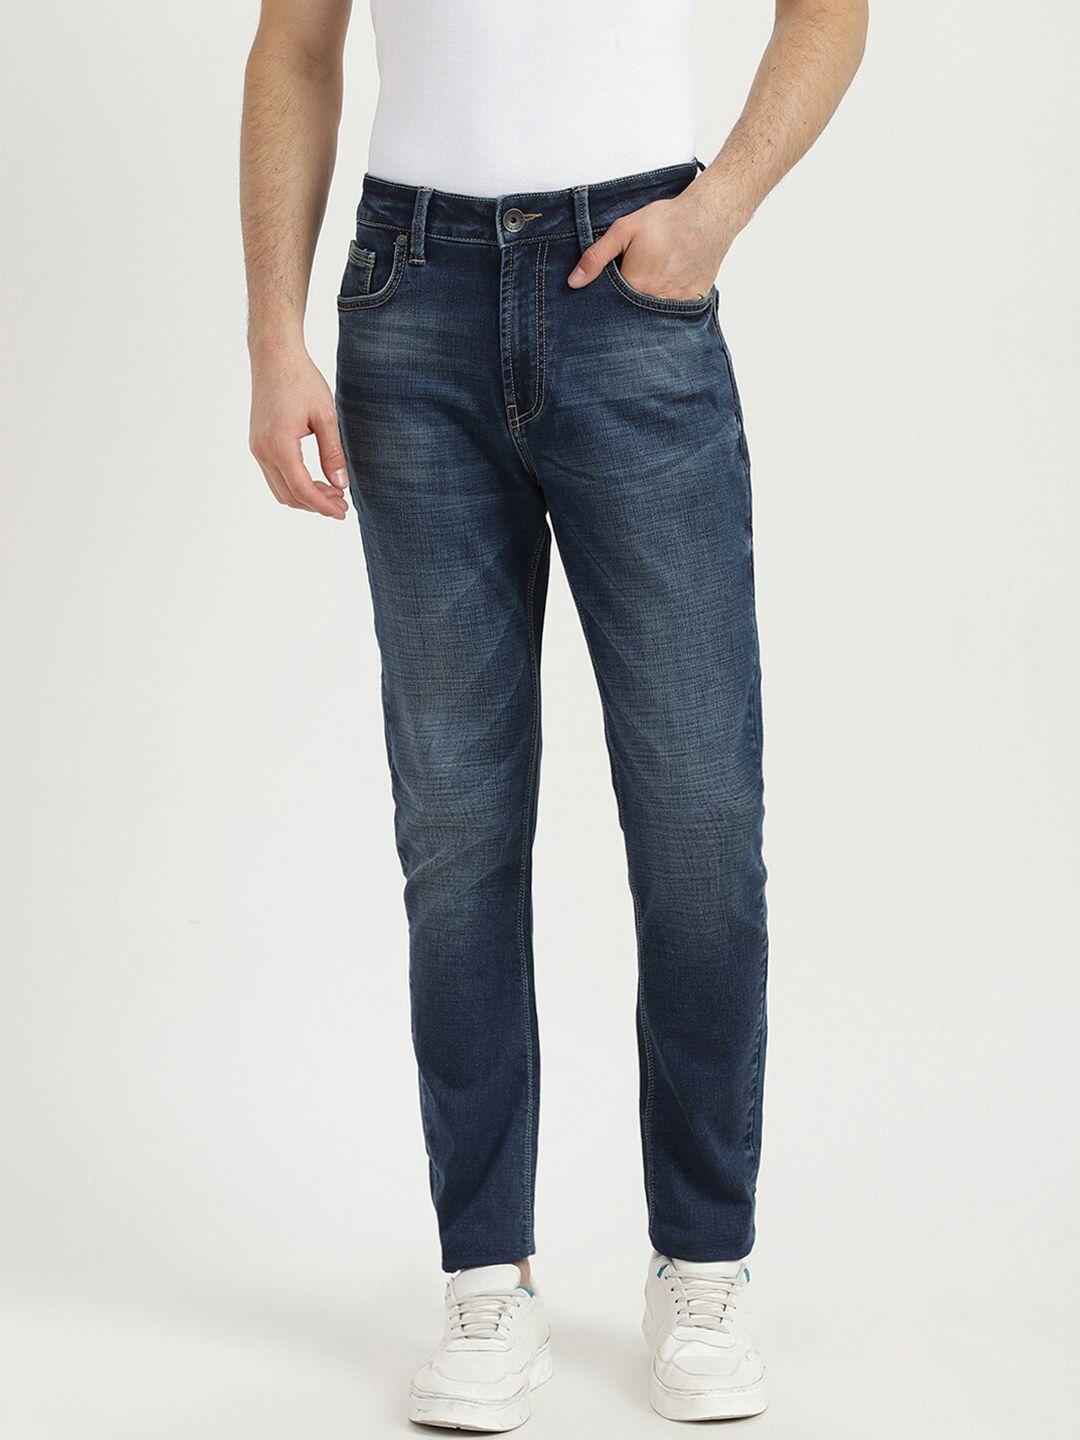 united-colors-of-benetton-men-blue-solid-cotton-slim-fit-light-fade-jeans